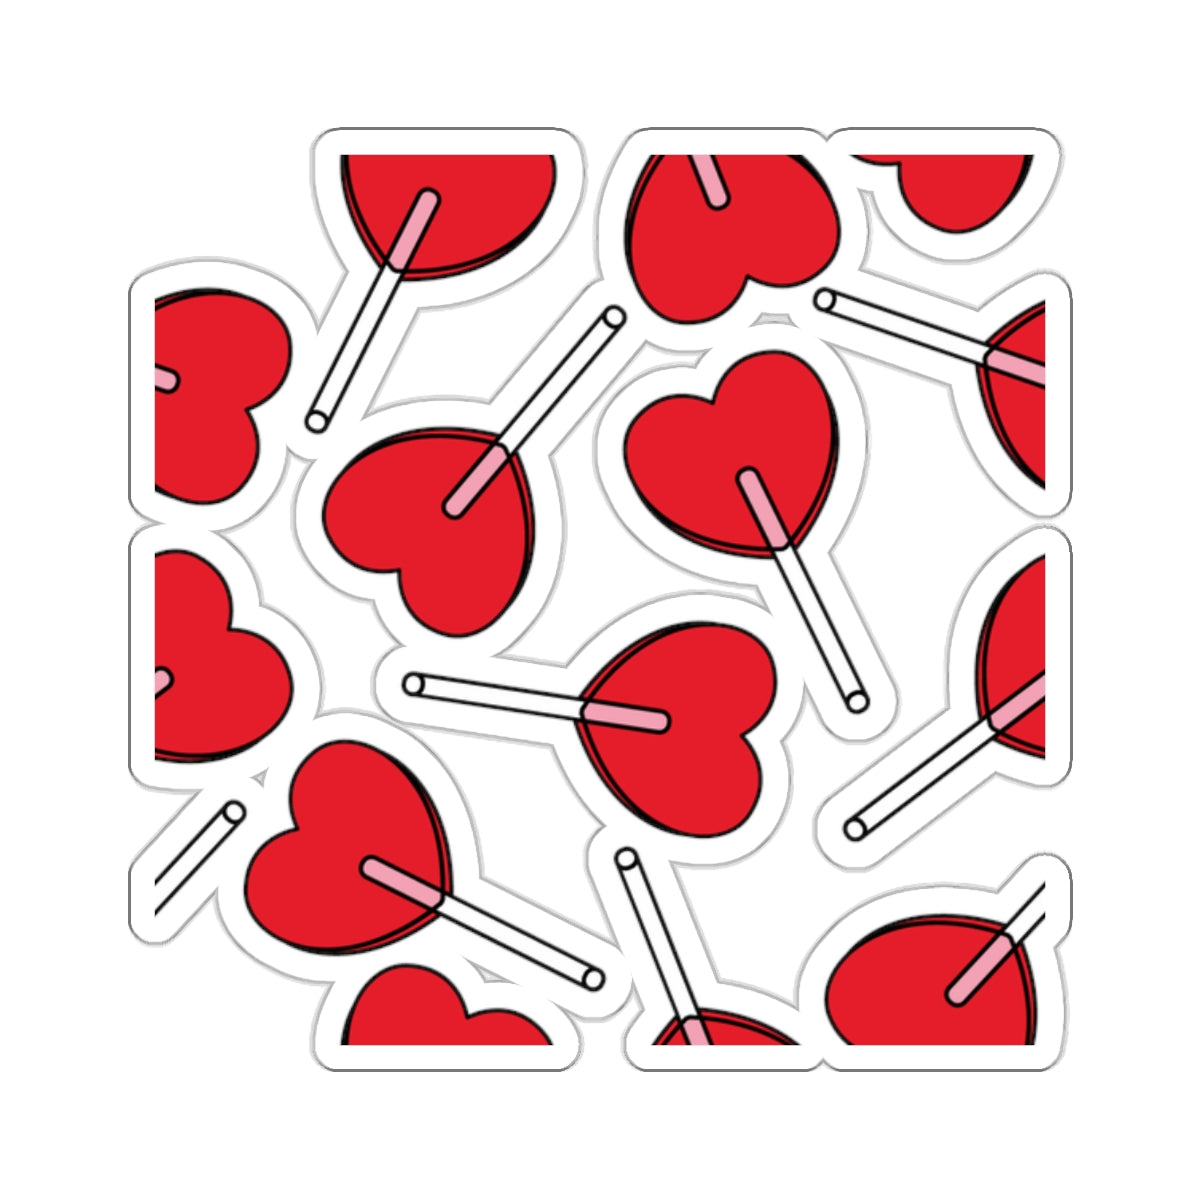 Tsalack Express Kiss-Cut Stickers